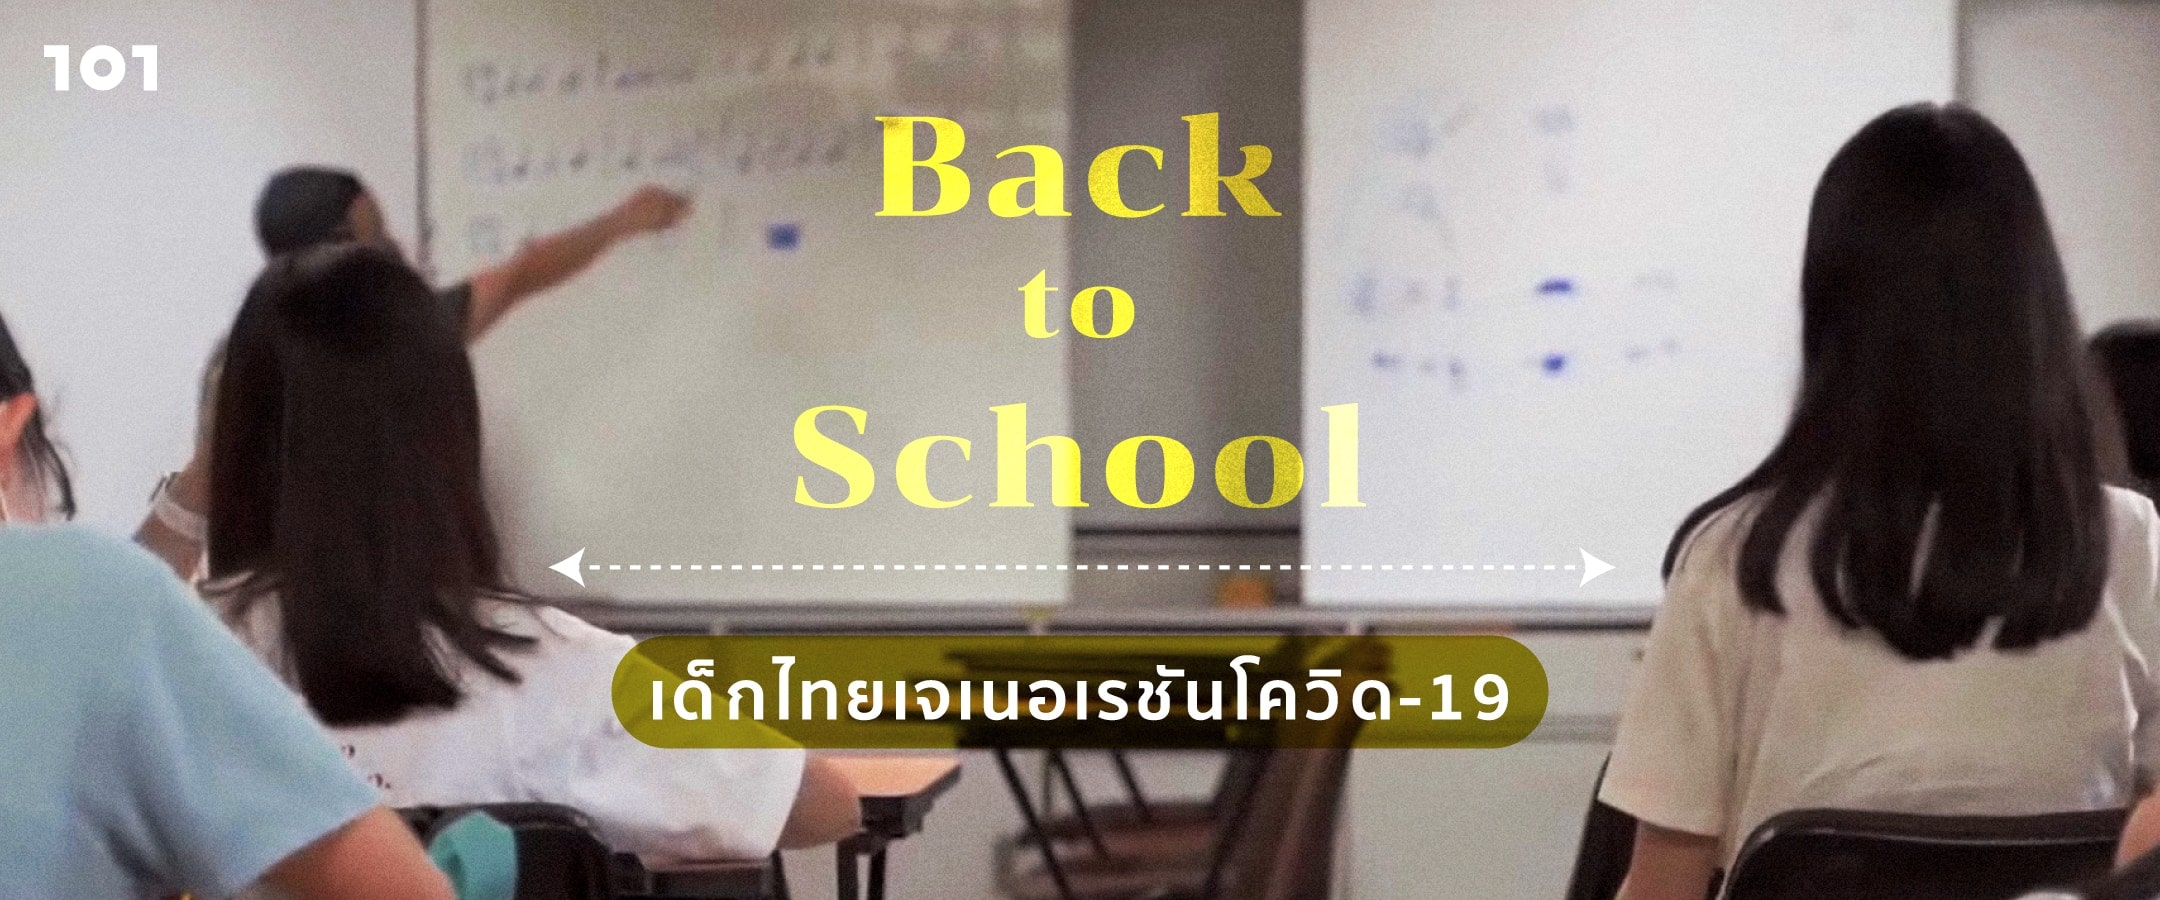 Back to school : เด็กไทยเจเนอเรชันโควิด-19